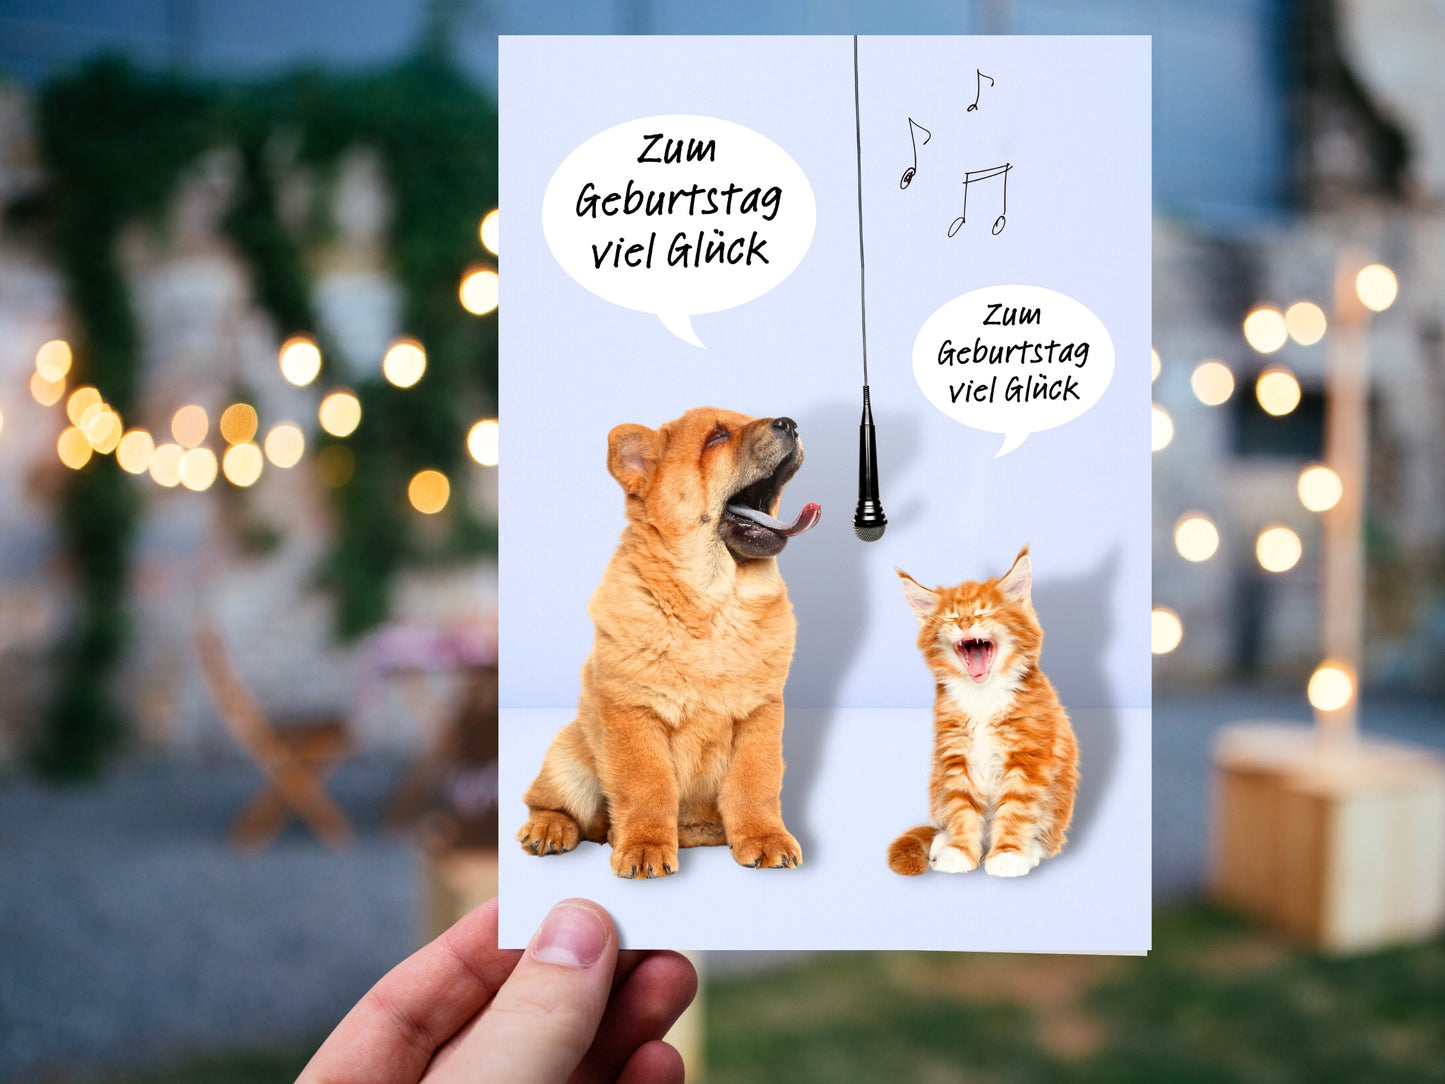 Puppy and Kitten Singing Birthday "Geburtstag" Greeting Card